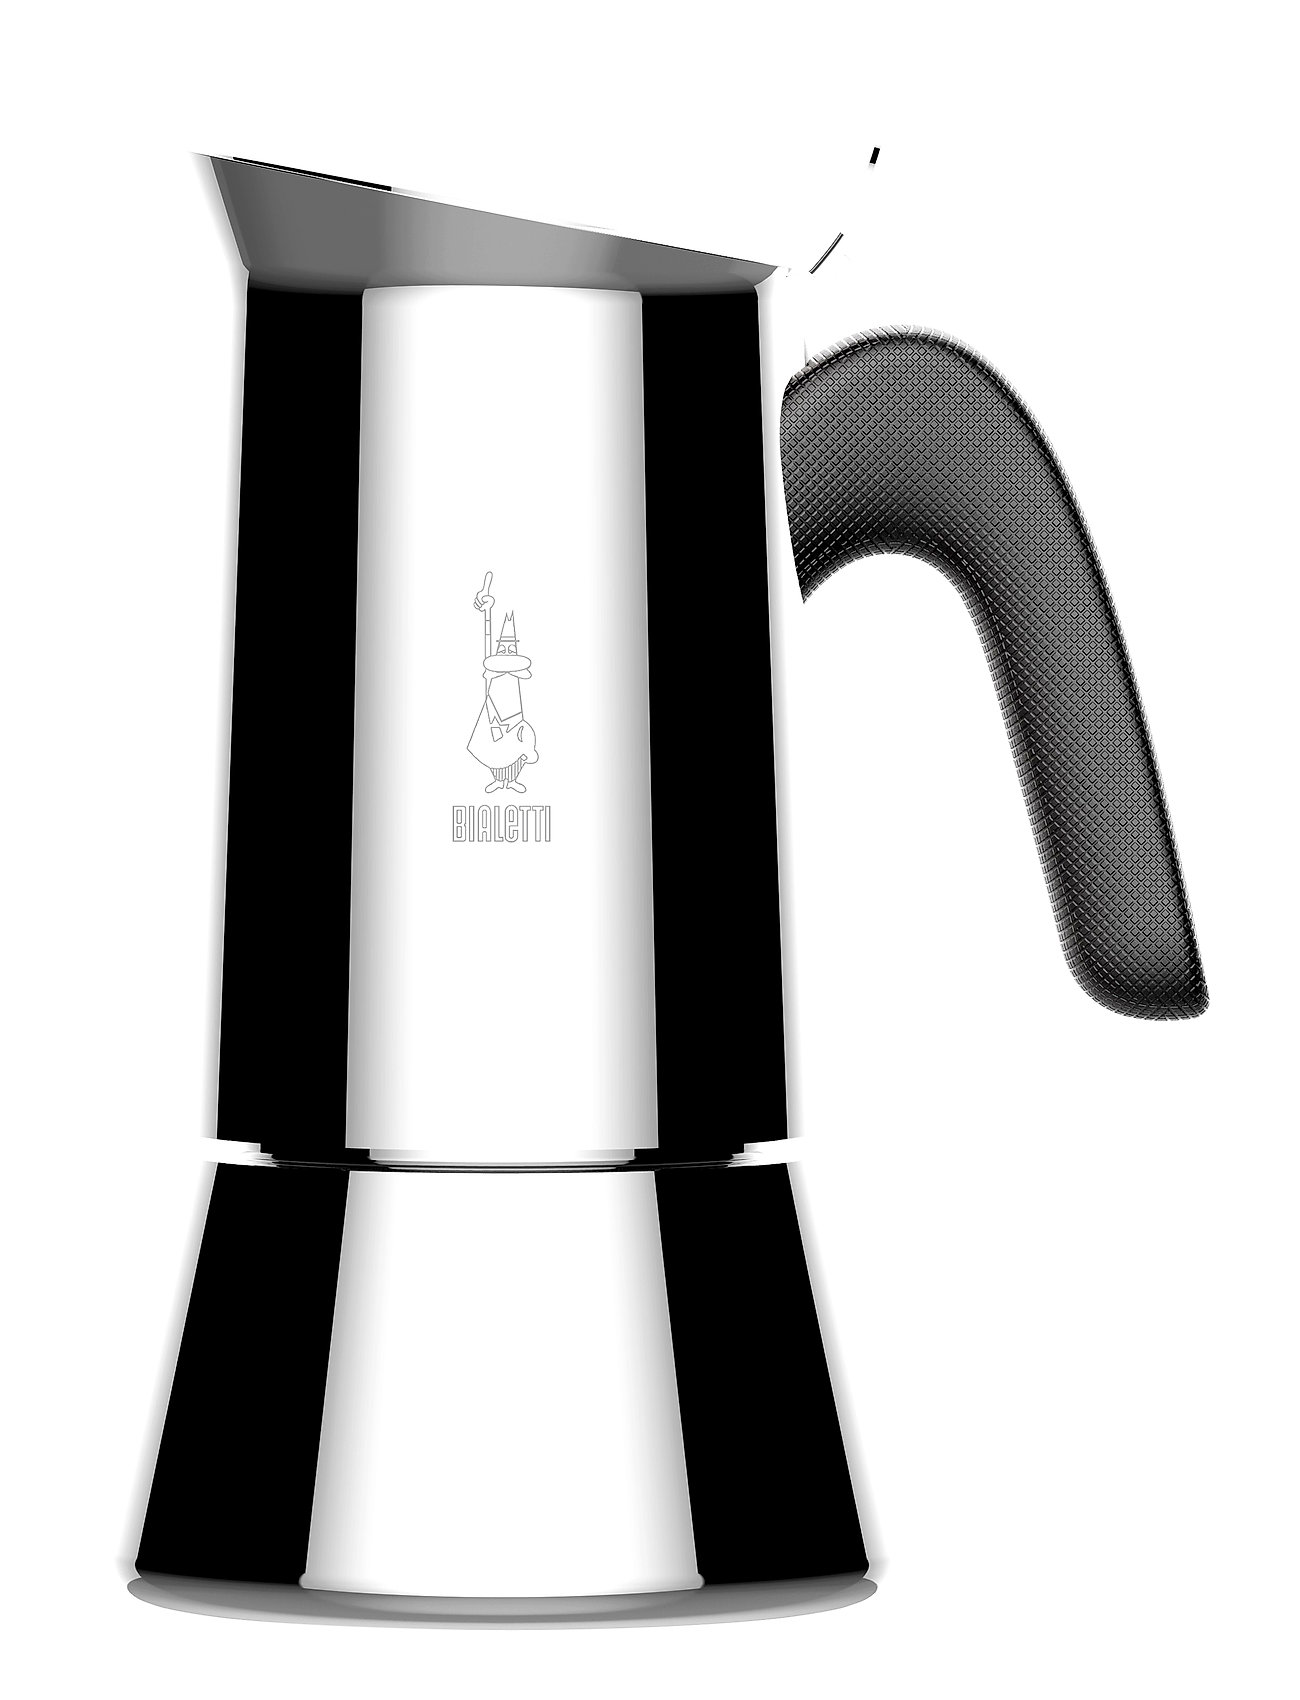 Venus New Induction In Box Home Kitchen Kitchen Appliances Coffee Makers Moka Pots Black Bialetti